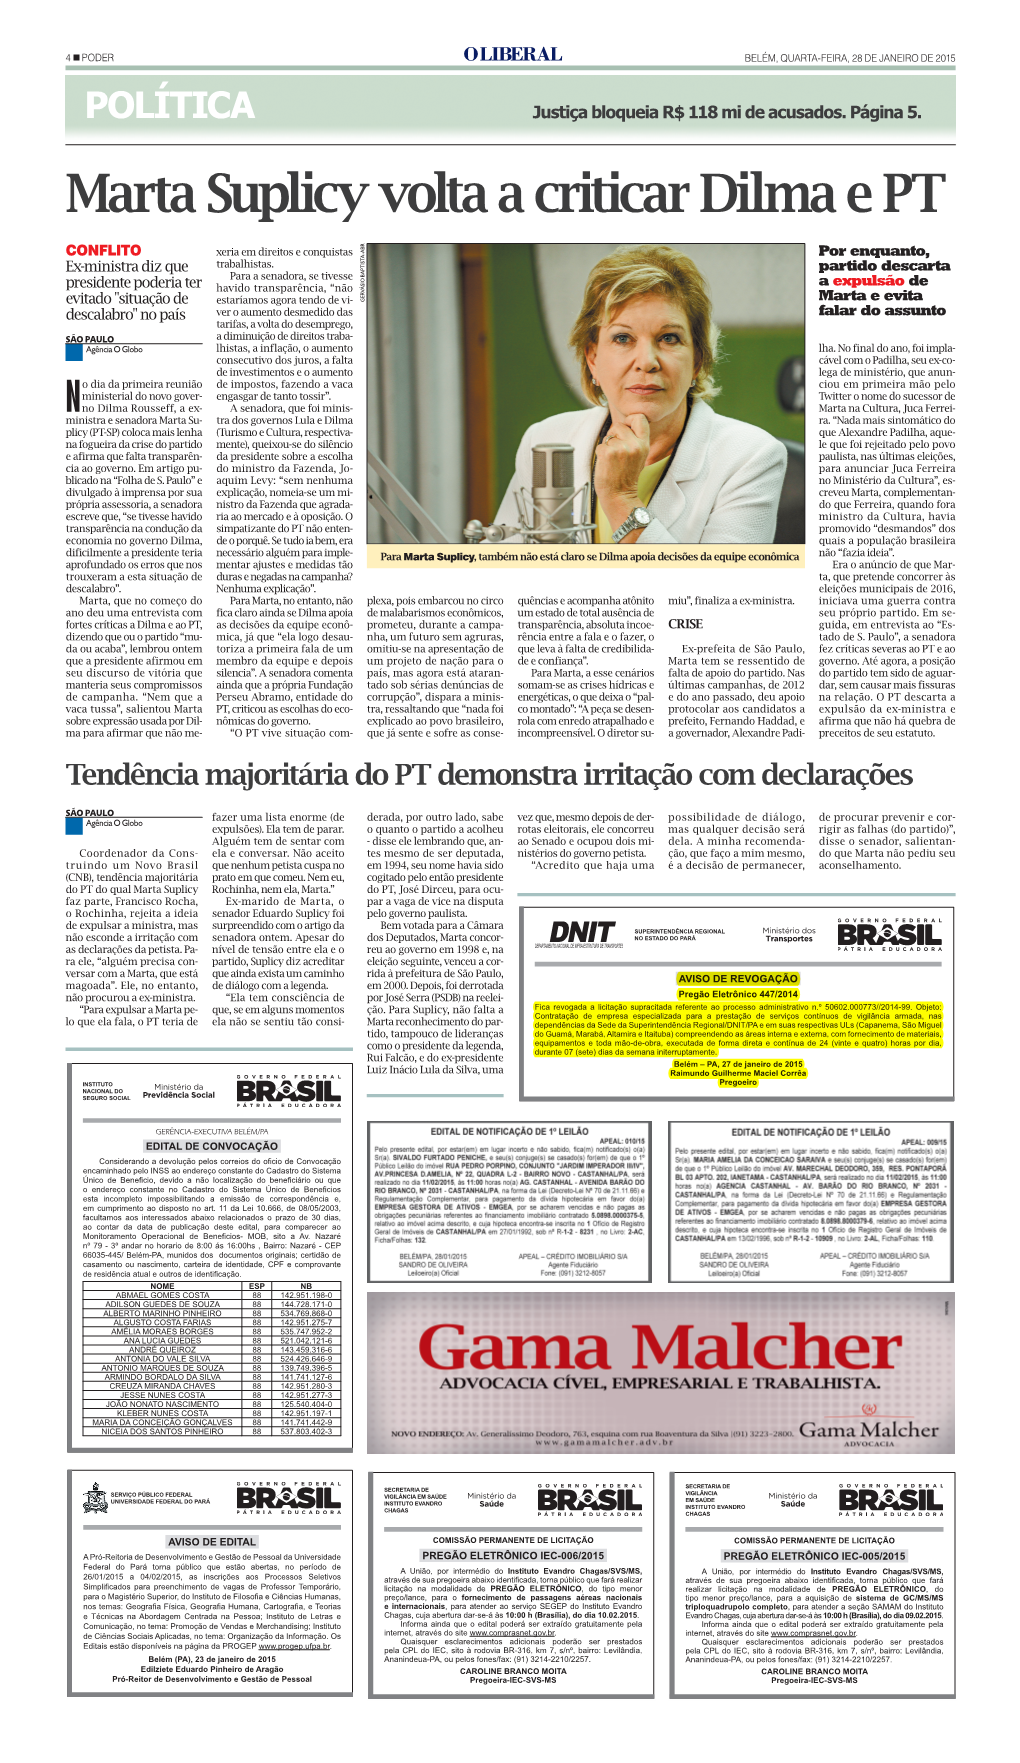 Marta Suplicy Volta a Criticar Dilma E PT